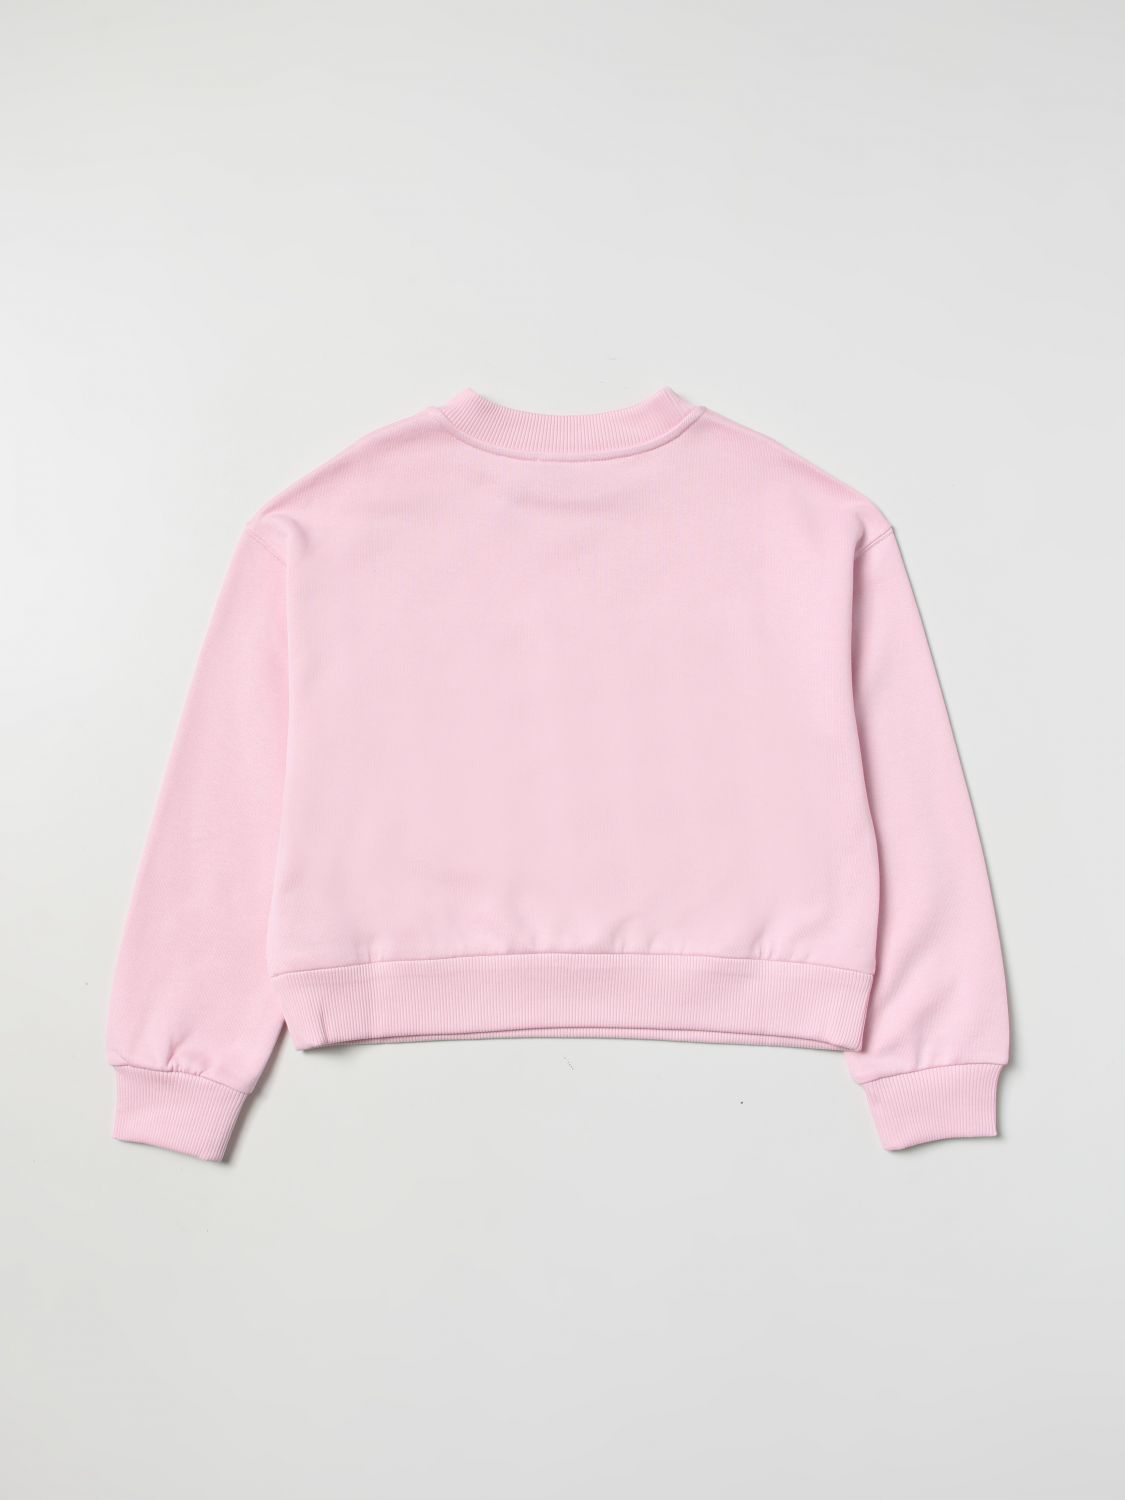 DOLCE & GABBANA: sweater for girls - Pink | Dolce & Gabbana sweater  L5JW8OG7IGH online on 